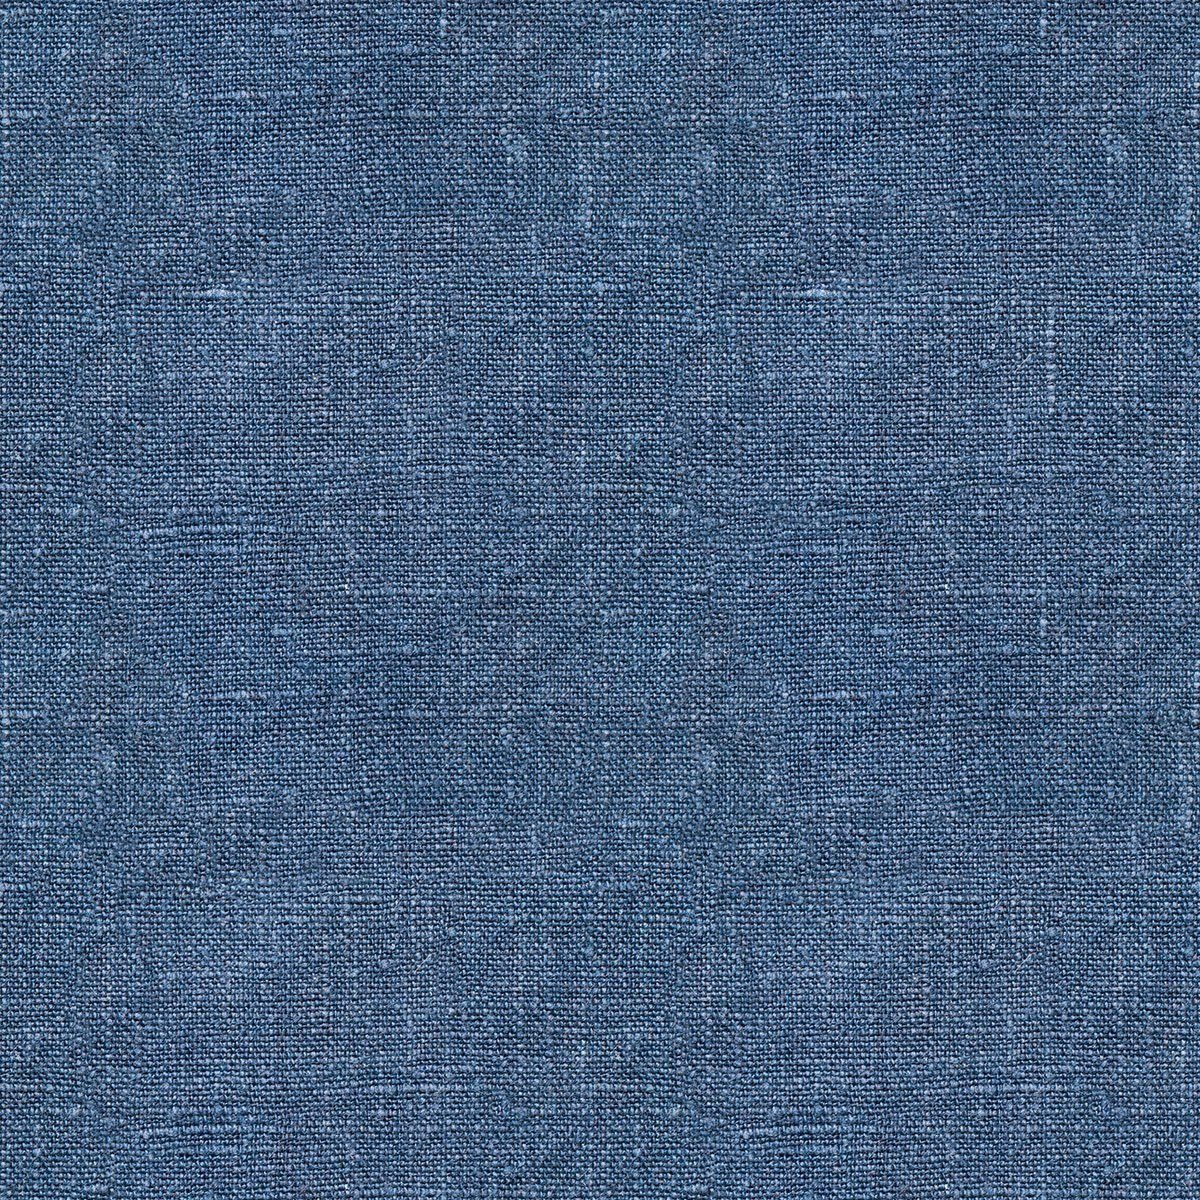 Cloth Texture Wallpaper Free Cloth Texture Background